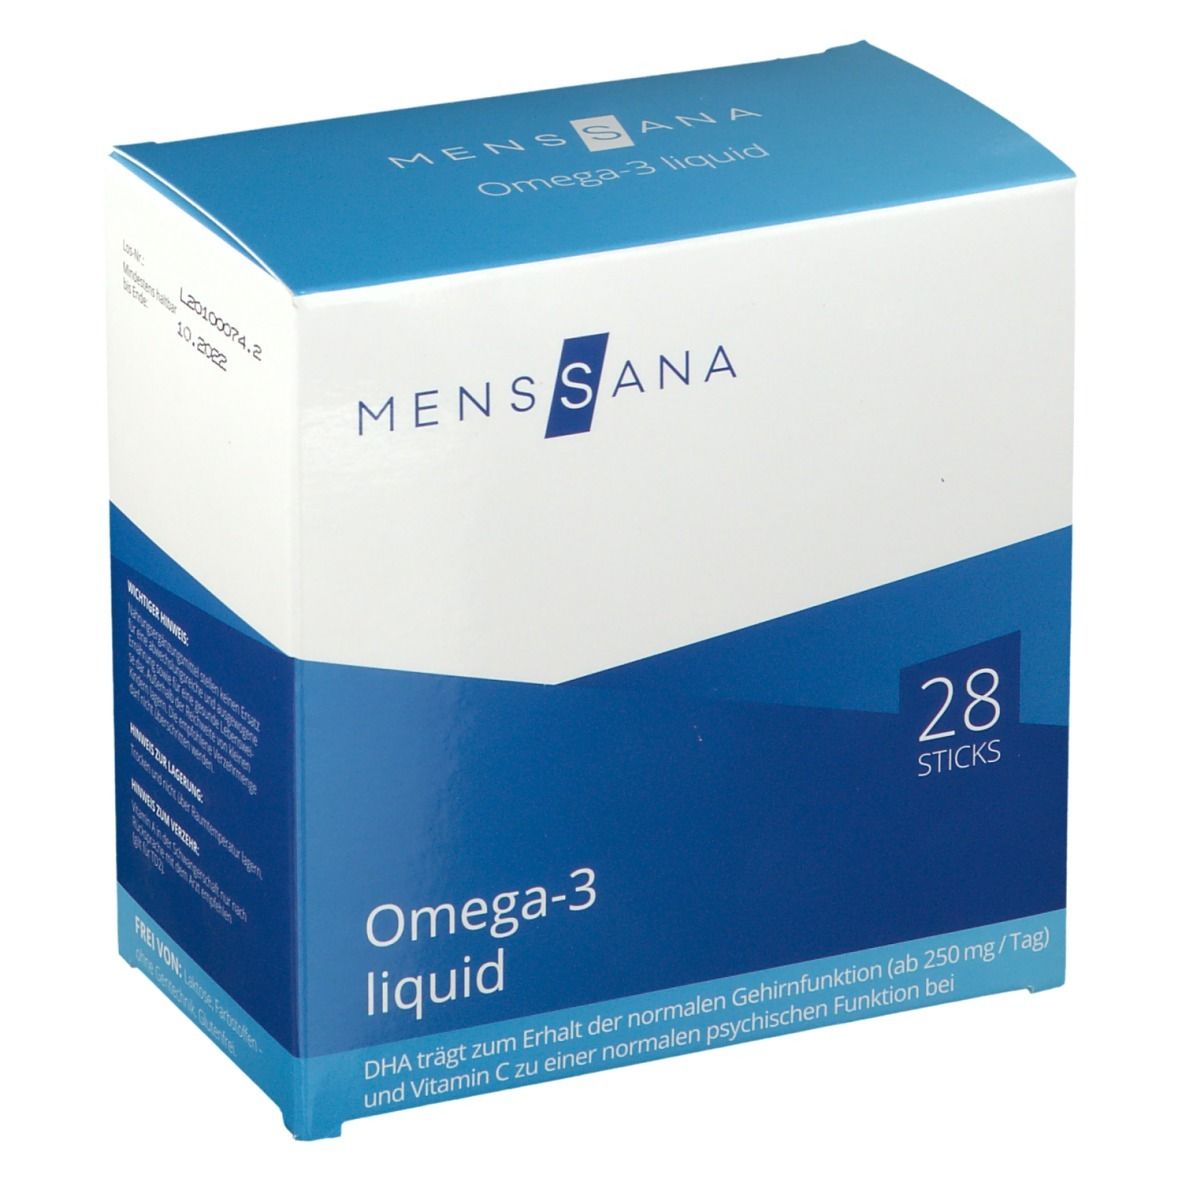 MensSana Omega-3 liquid